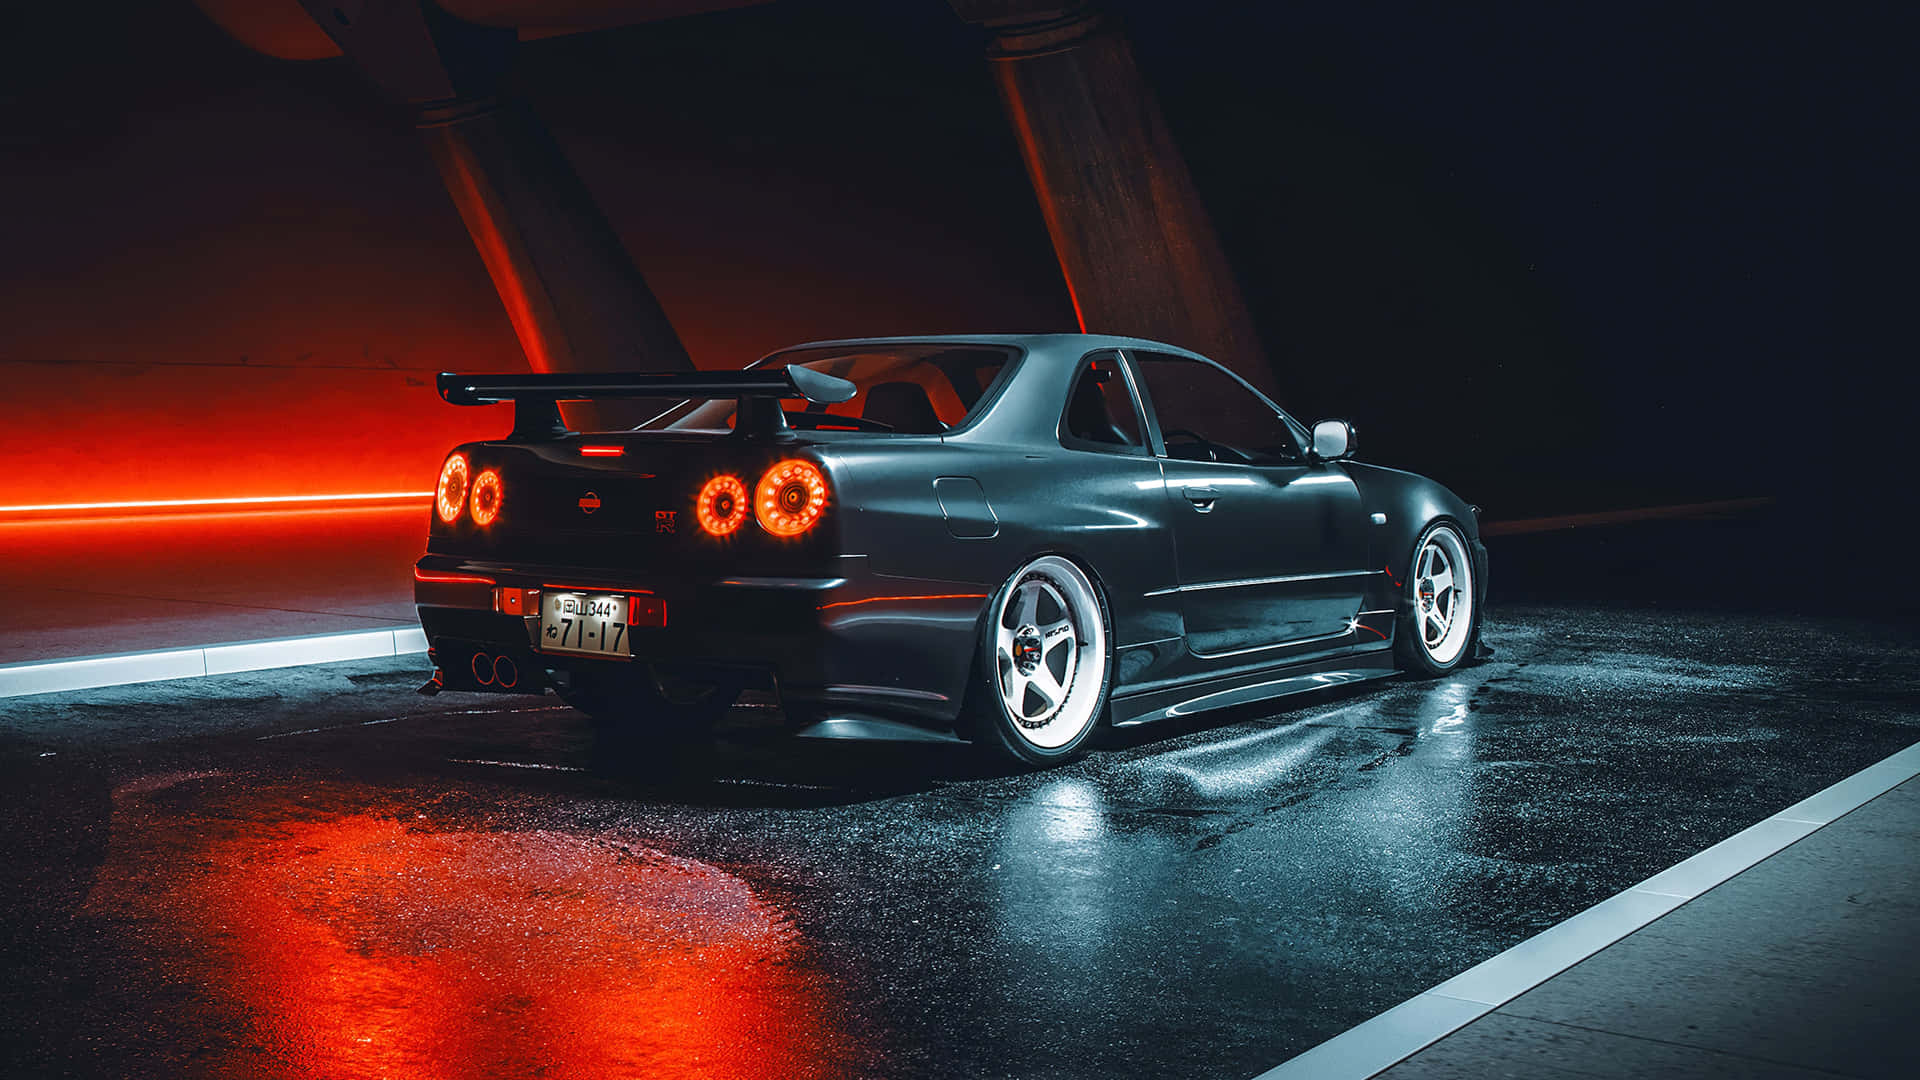 Nissan Skyline [wallpaper]